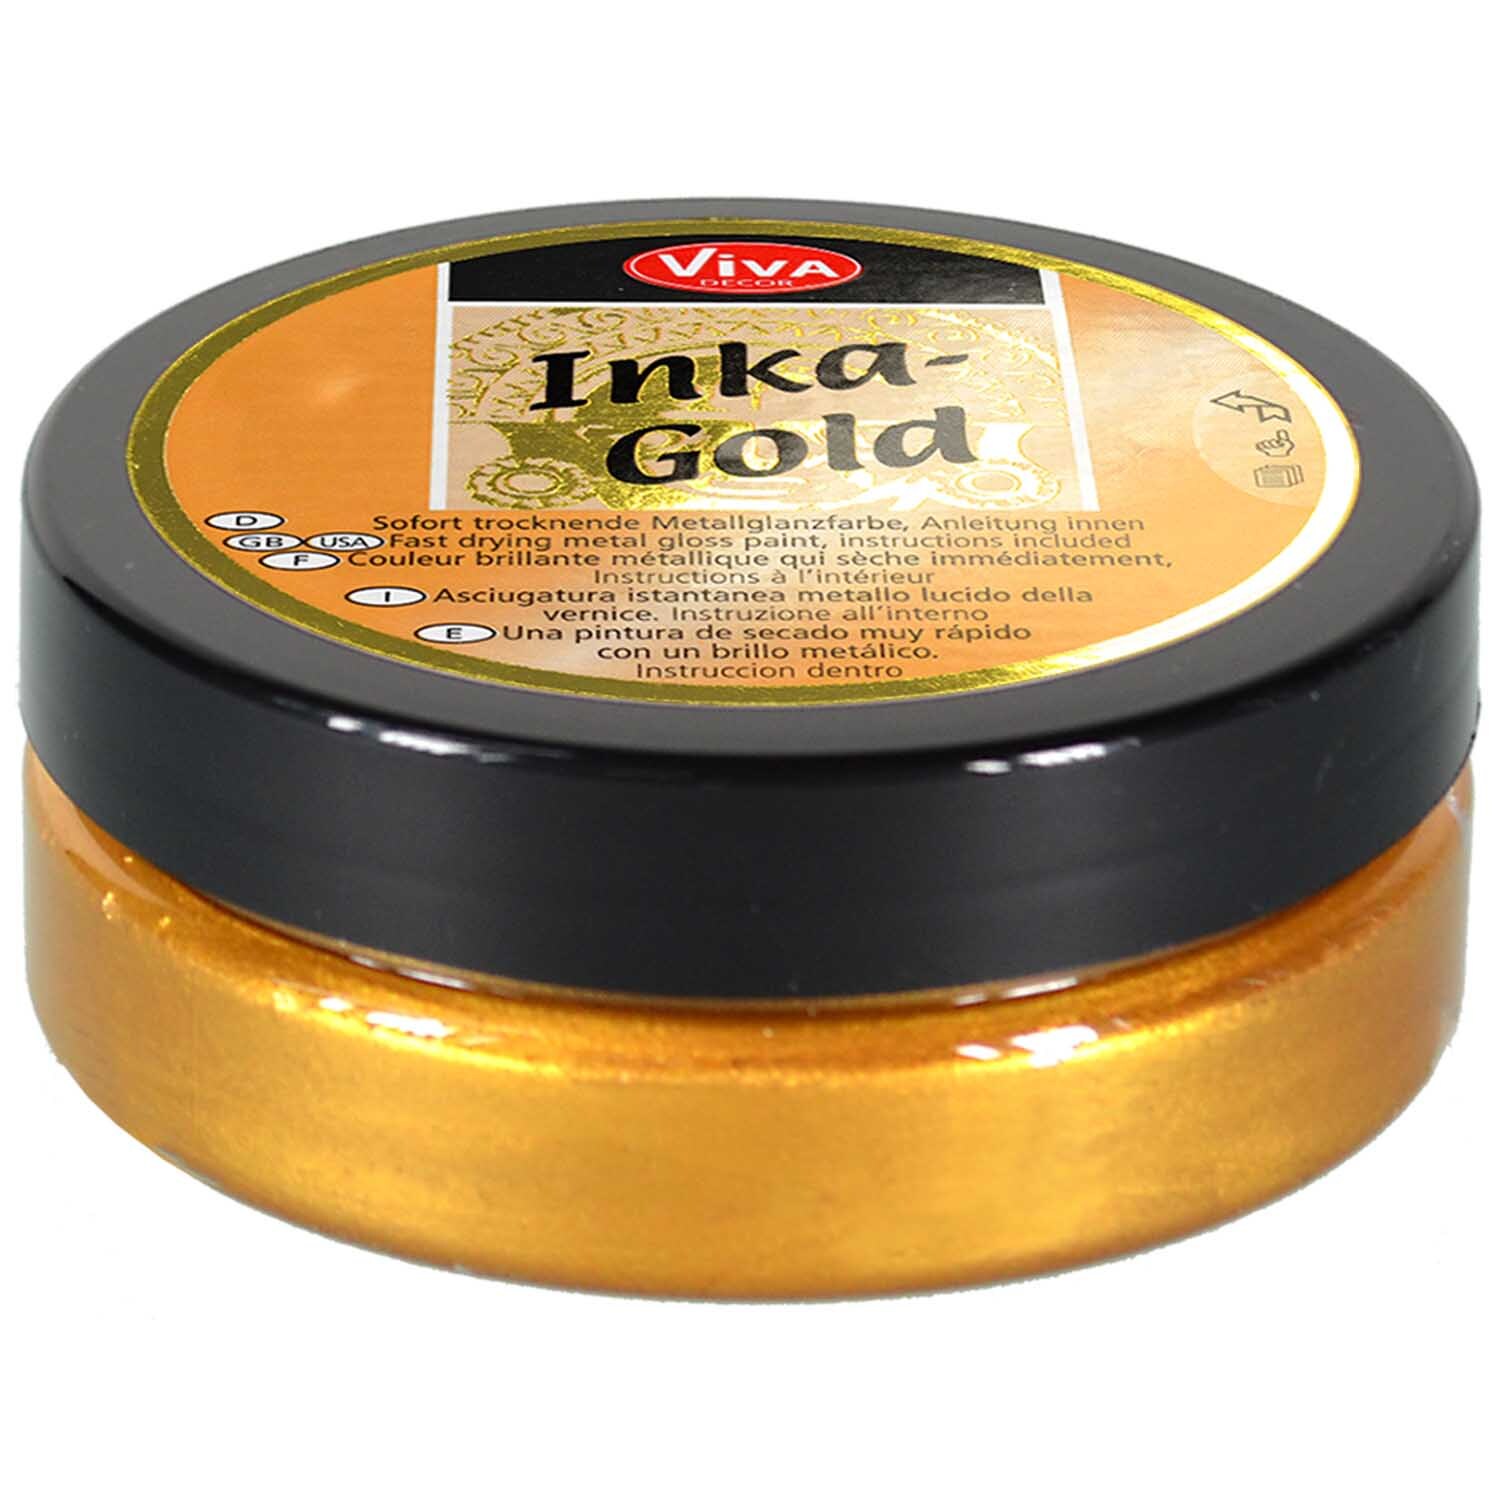 Inka-Gold 62,5g